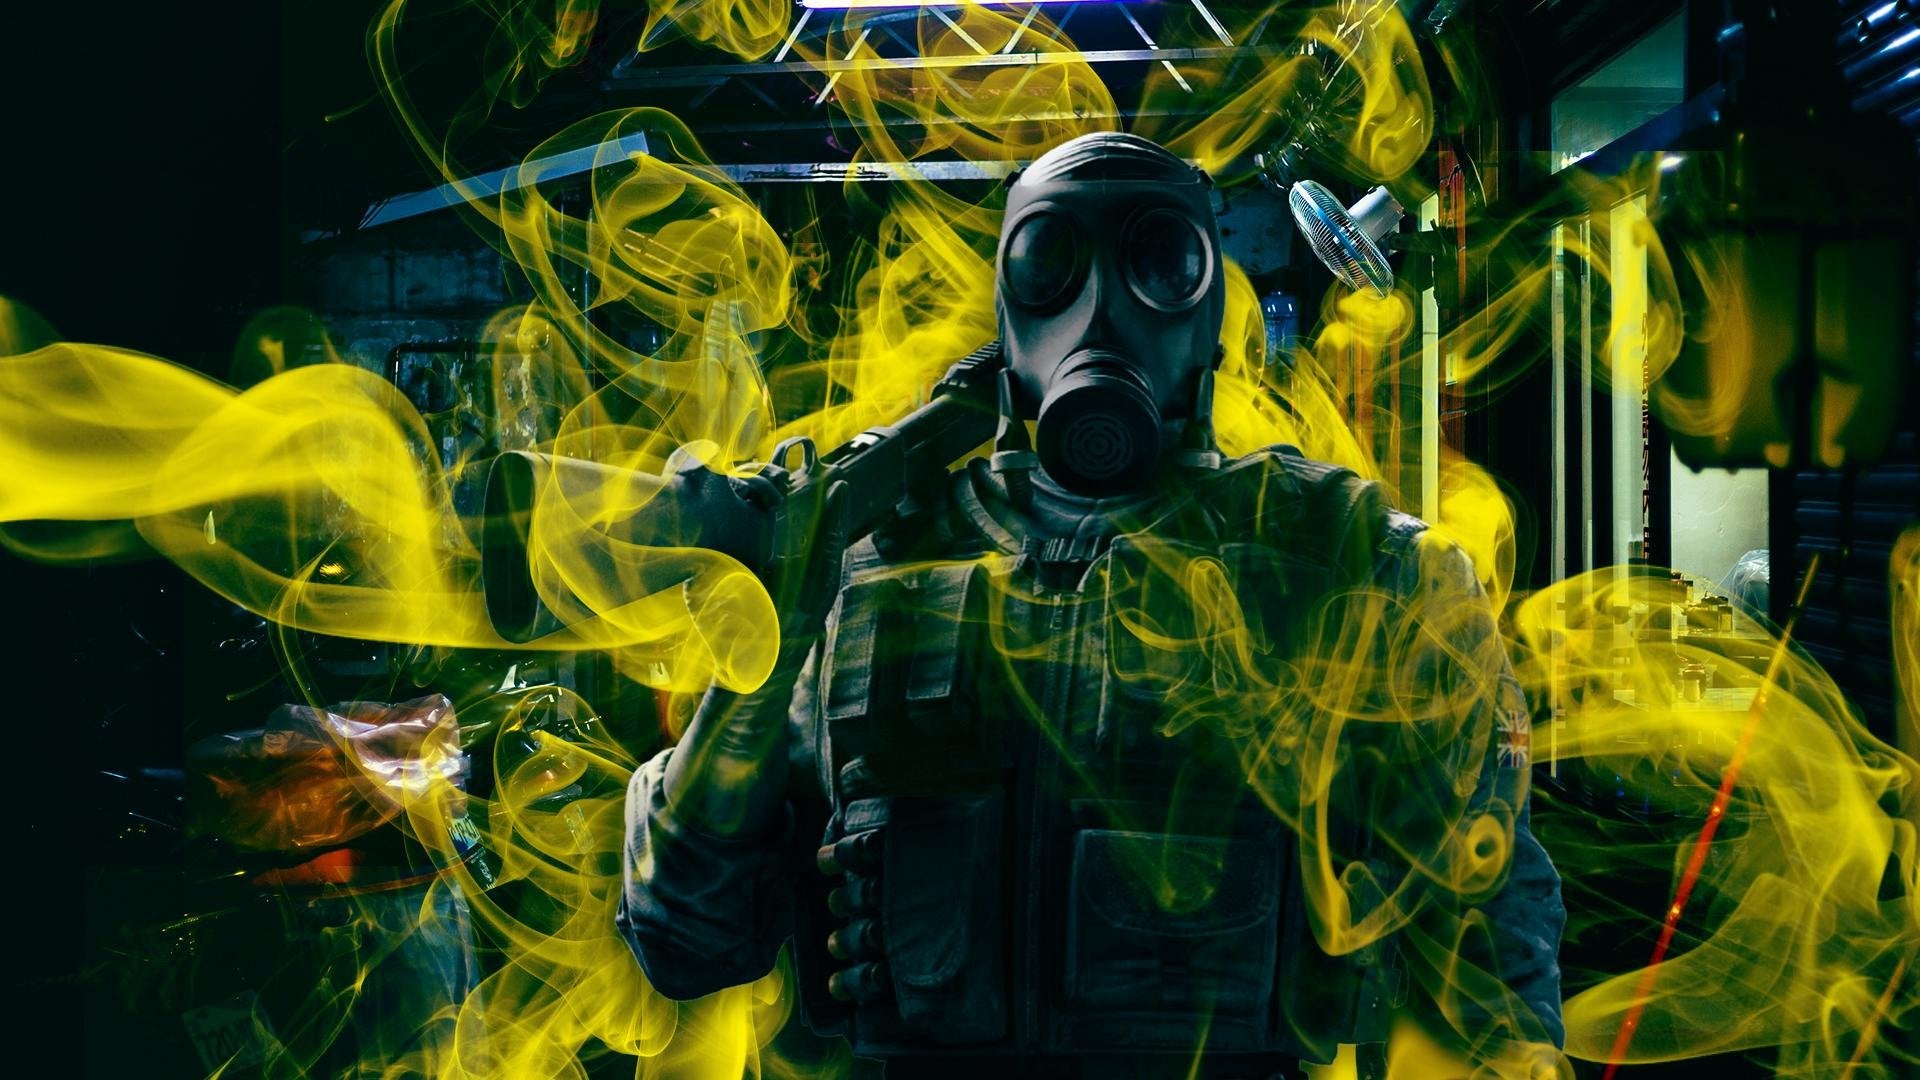 arco iris seis asedio humo fondo de pantalla,equipo de protección personal,verde,máscara,máscara de gas,disfraz